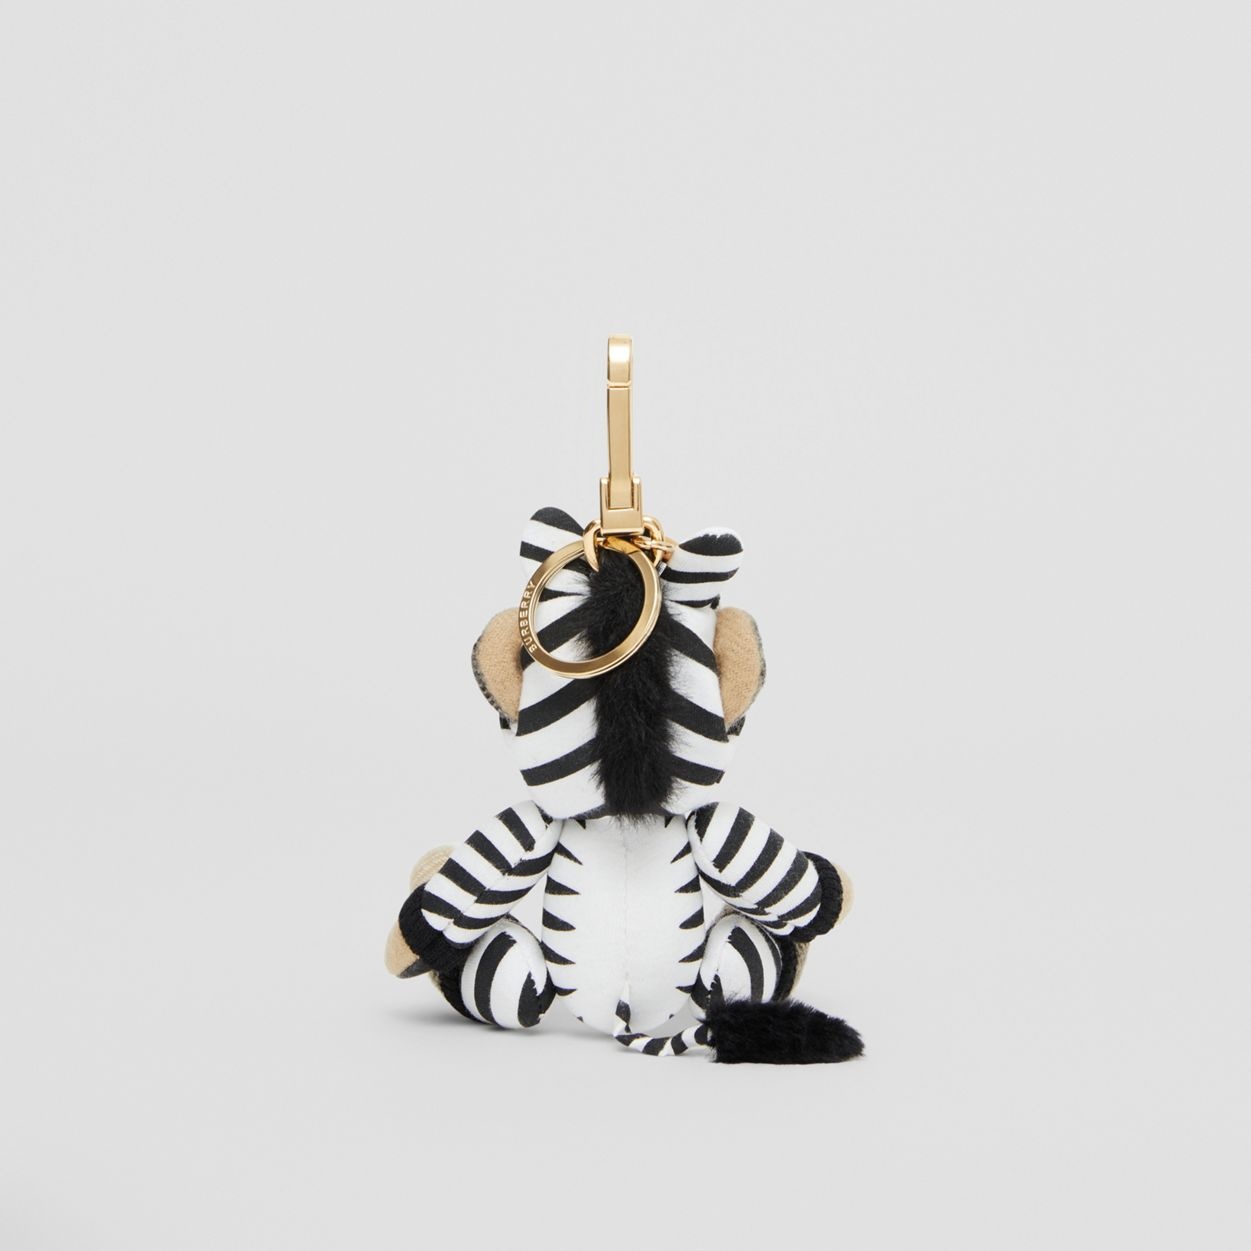 Thomas Bear Charm in Zebra Costume - 4